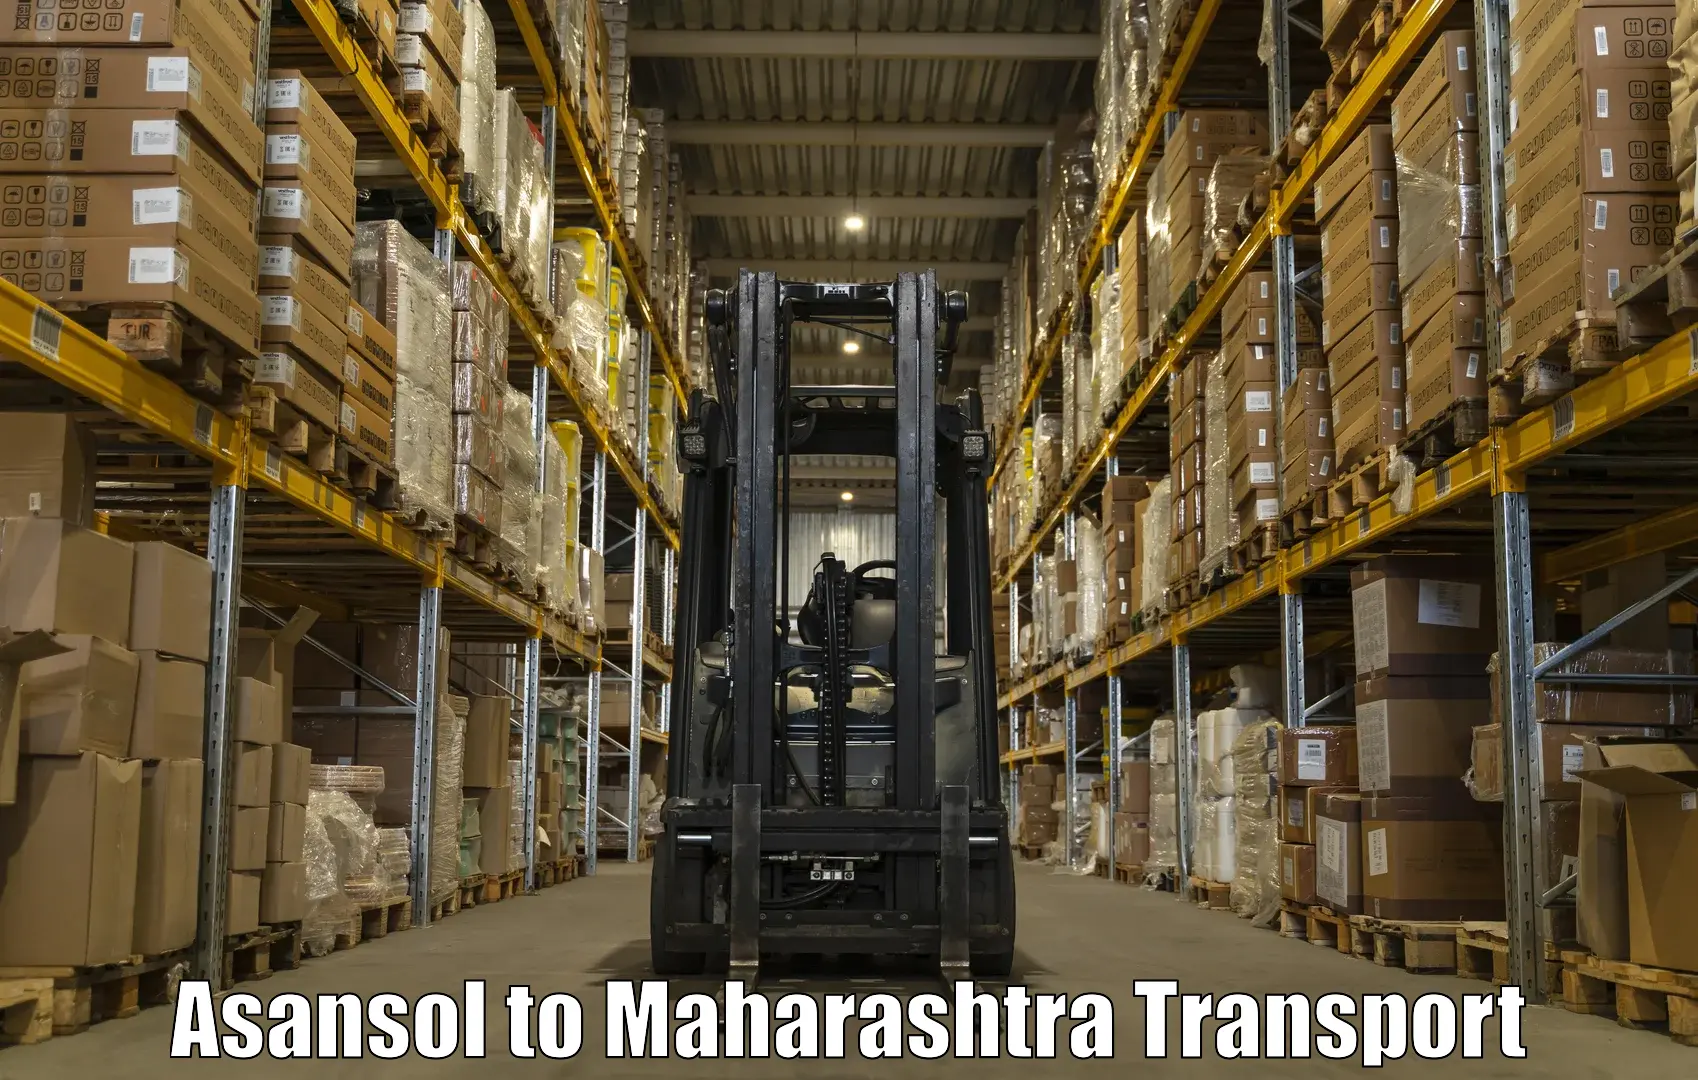 Shipping partner Asansol to Chandrapur